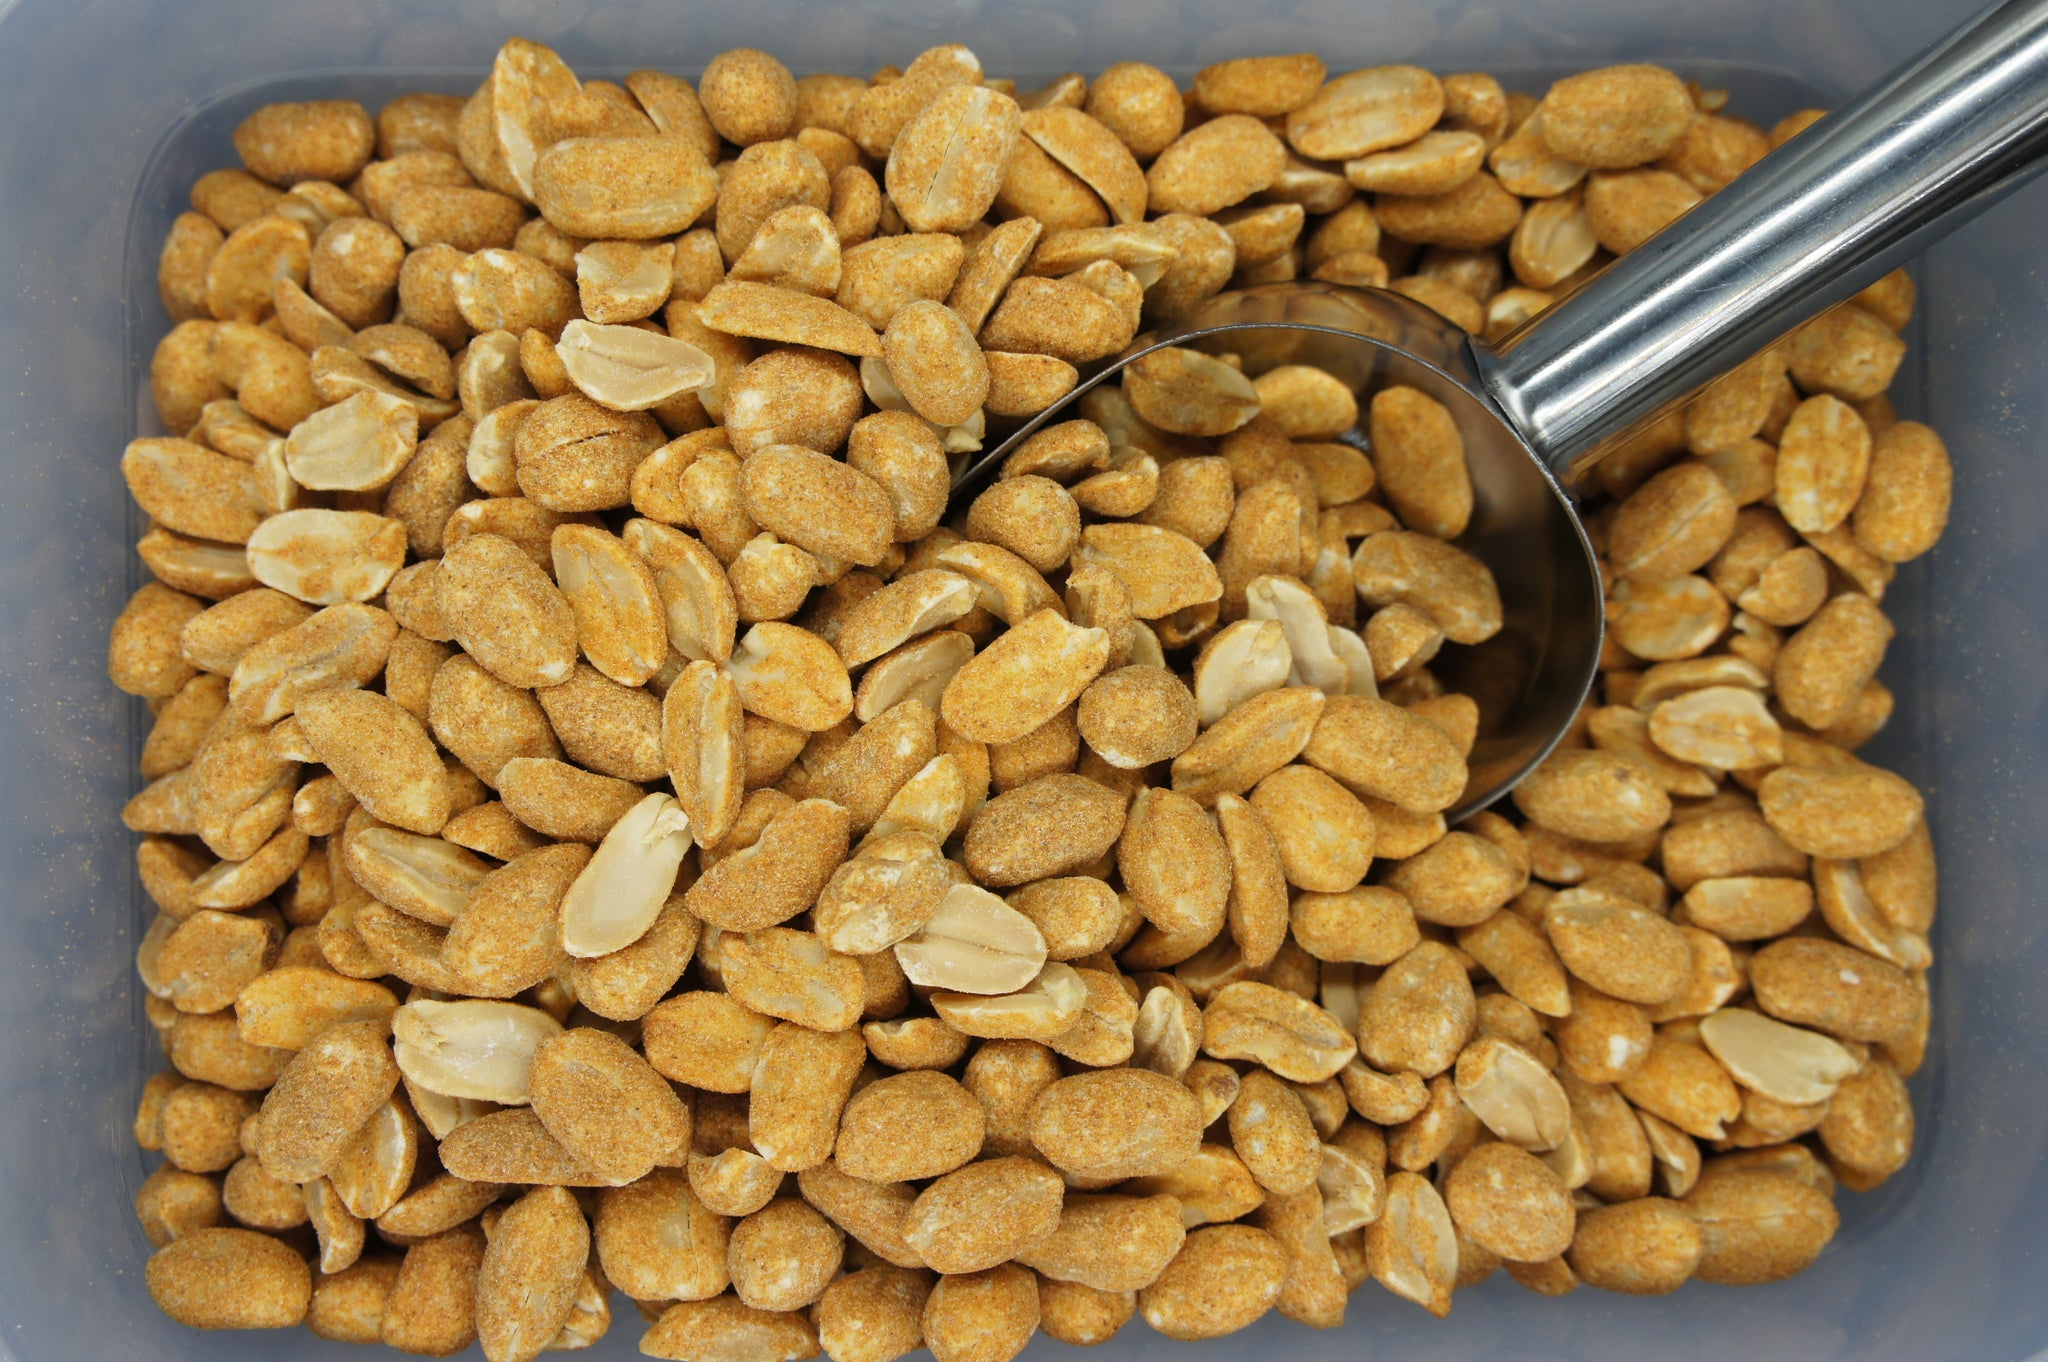 Dry Roasted Peanuts New recipe per 100g Bbe:Feb 24